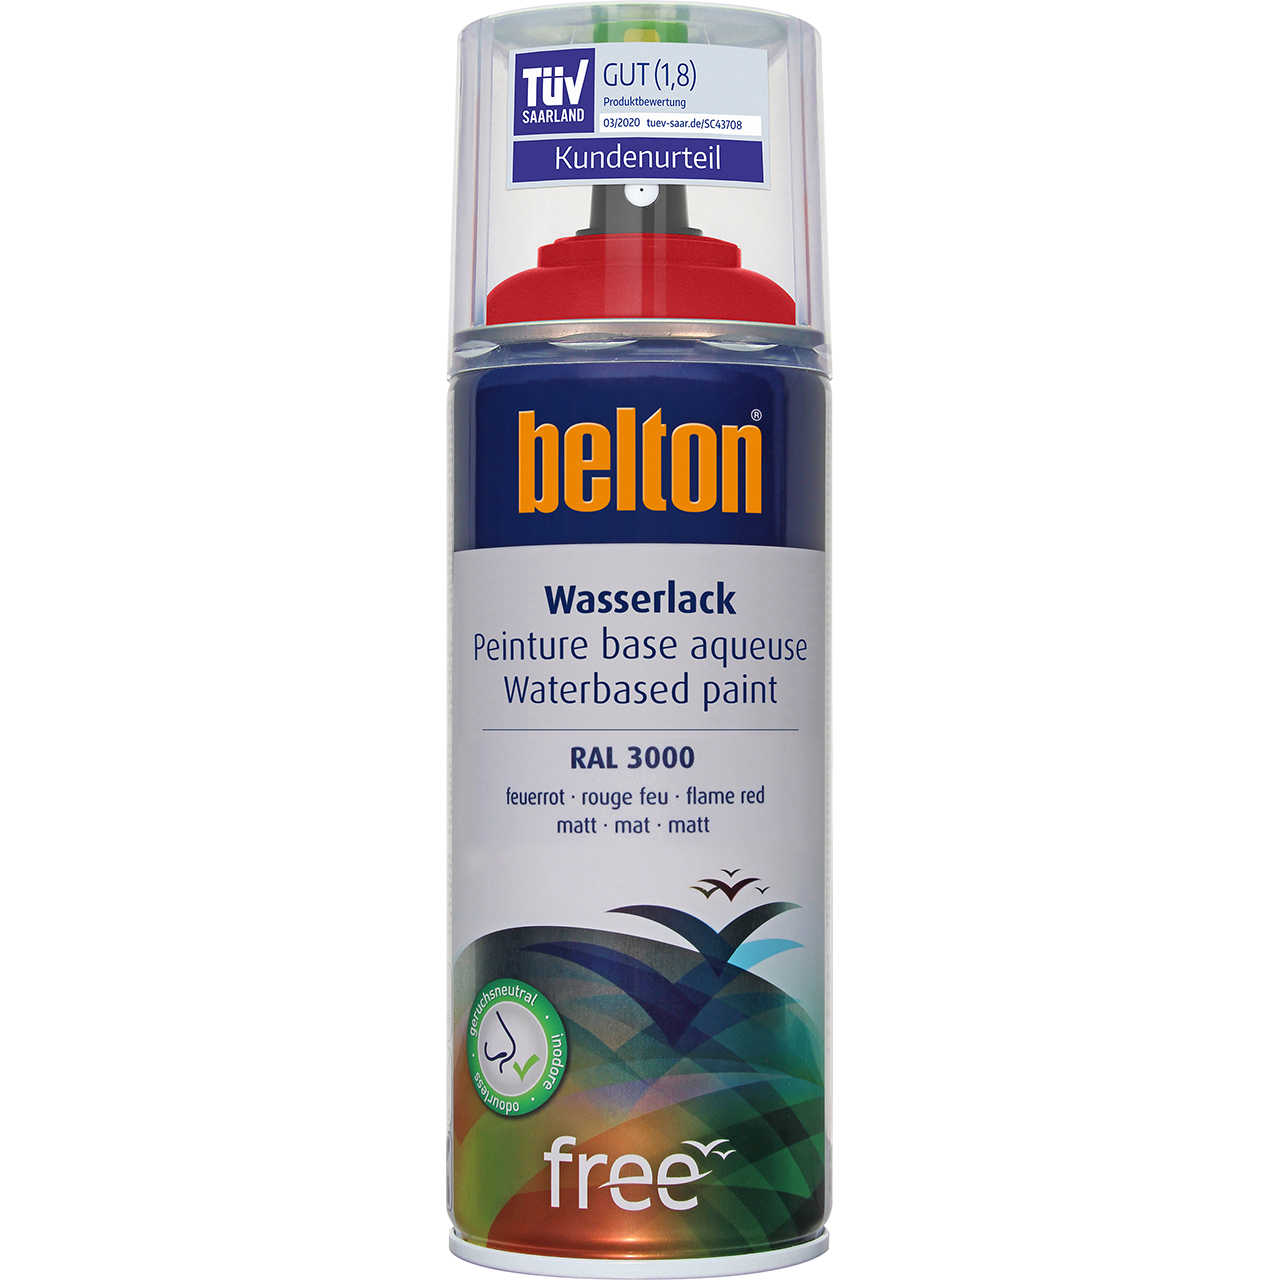 belton free Wasserlack feuerrot matt, 400ml